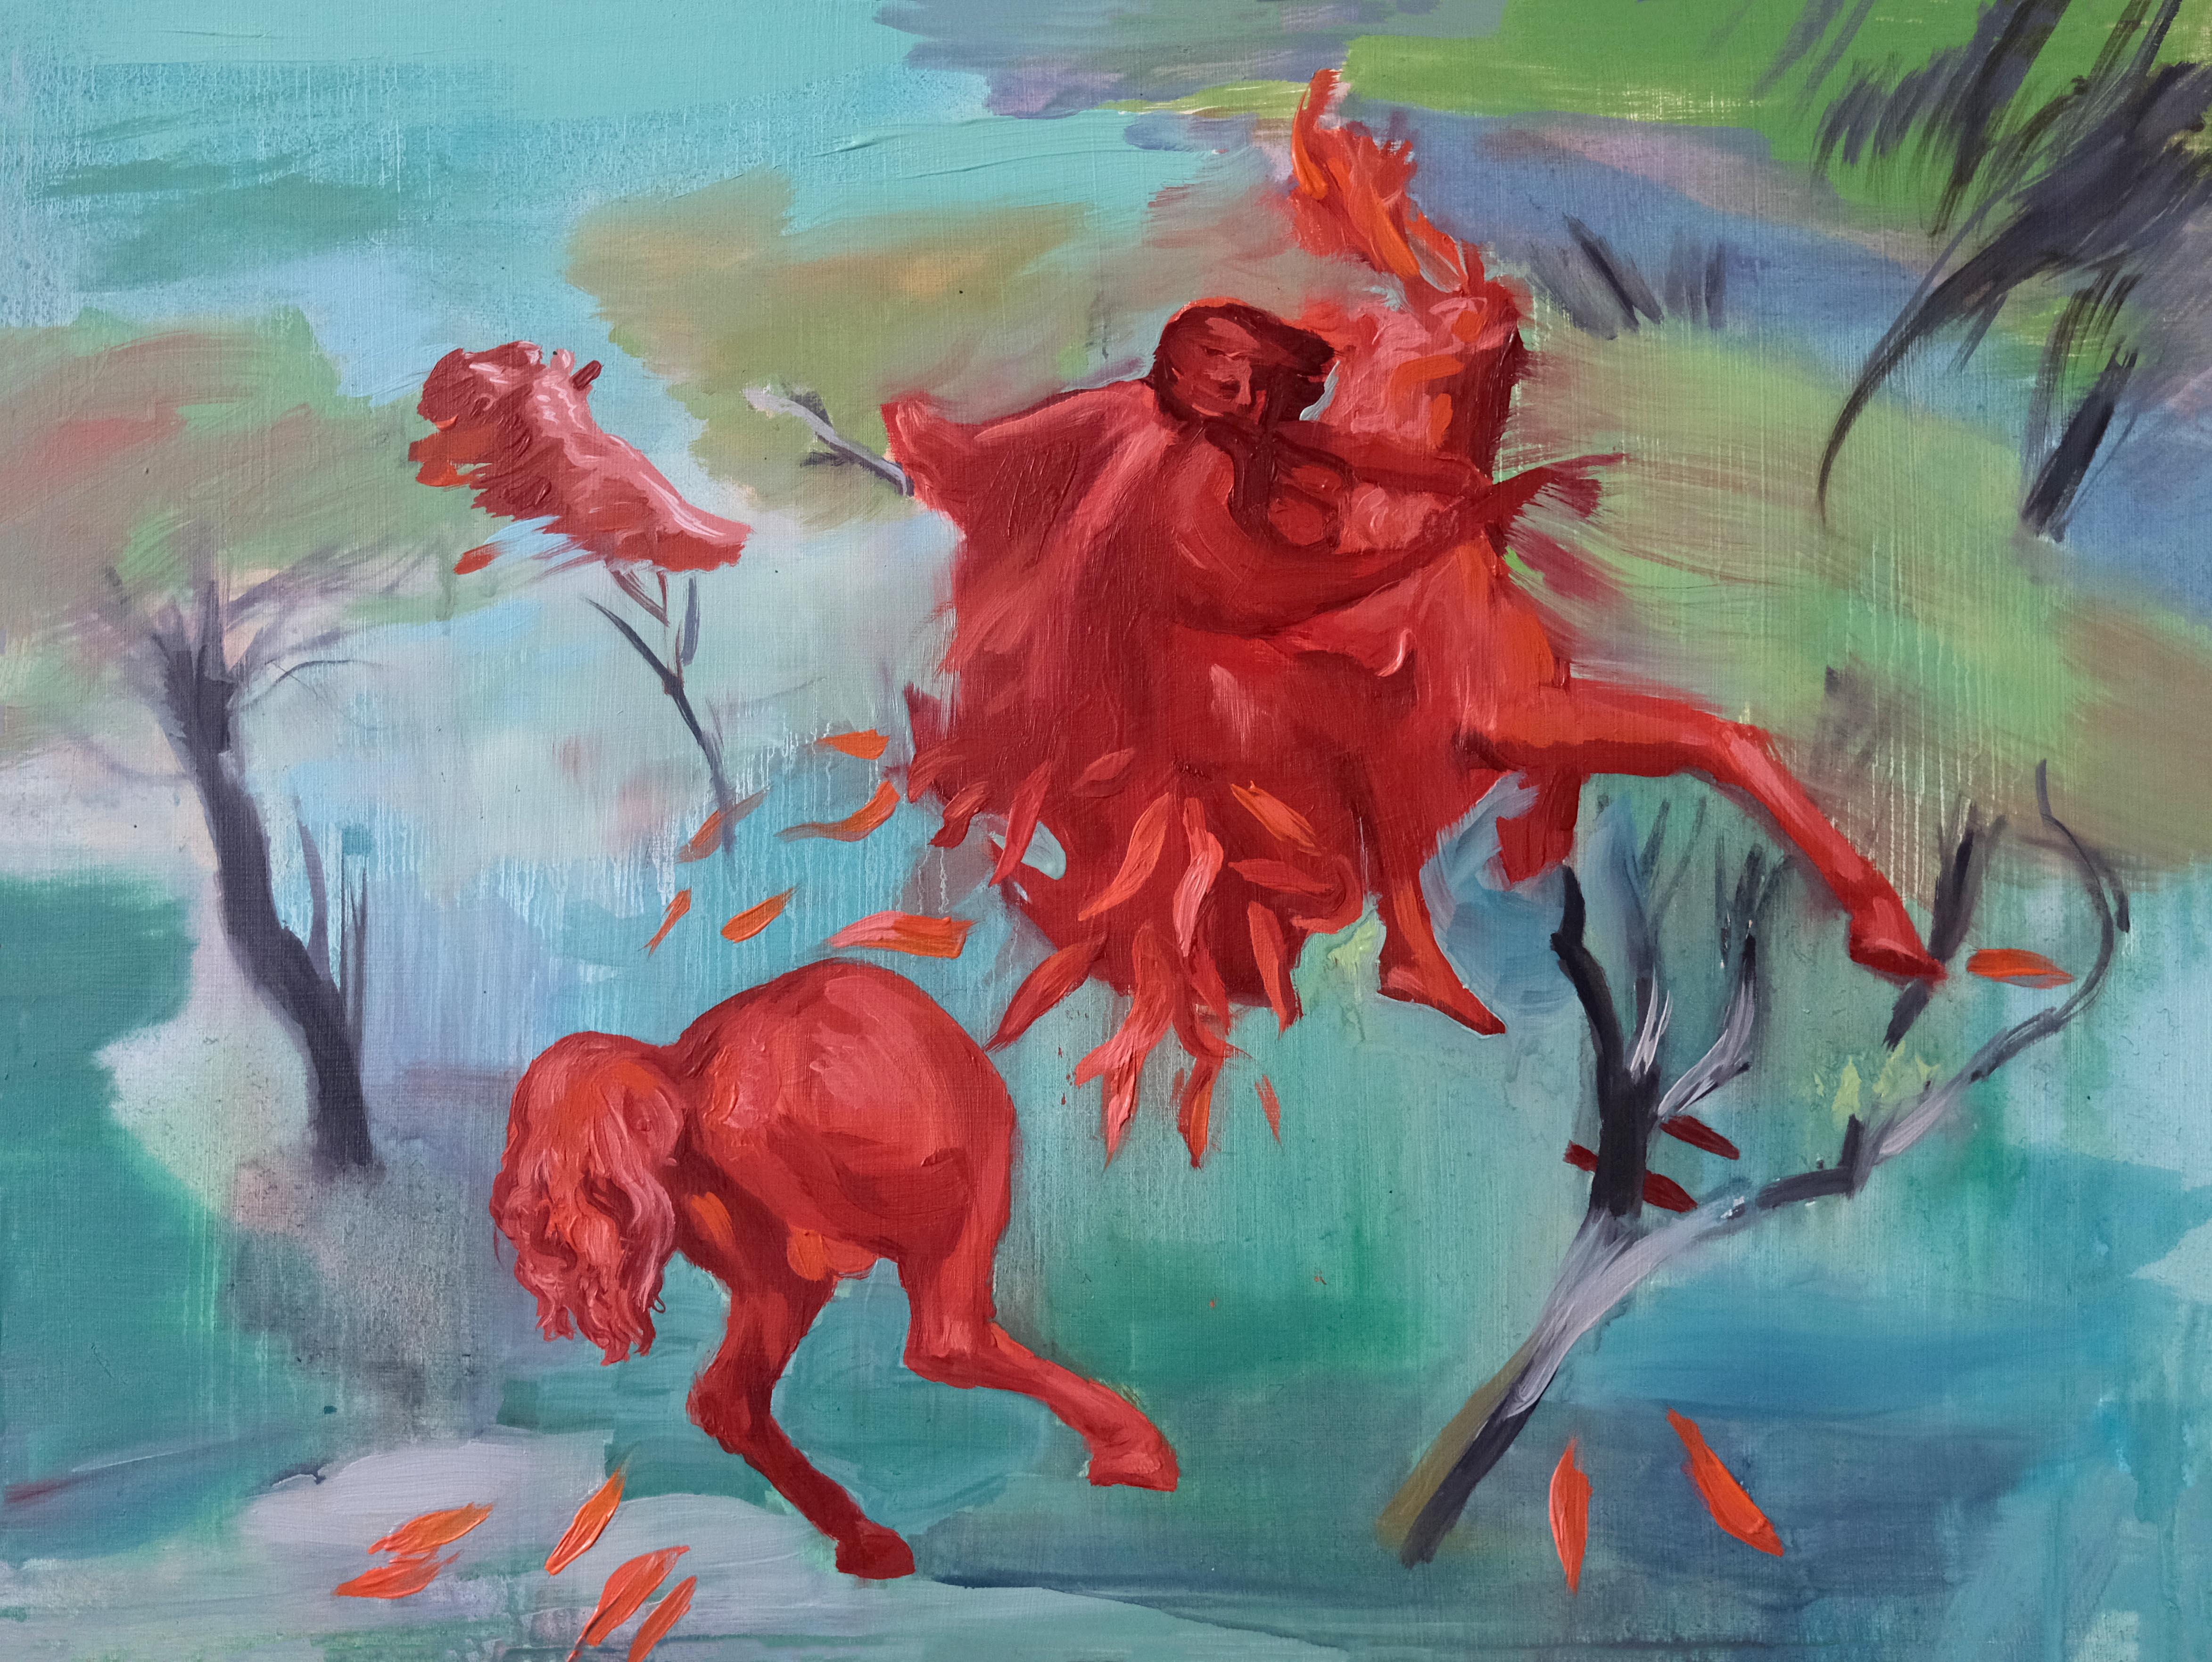 Hippo_schism Horse, apocalypsis, red horse, water, broken horse, horse rider